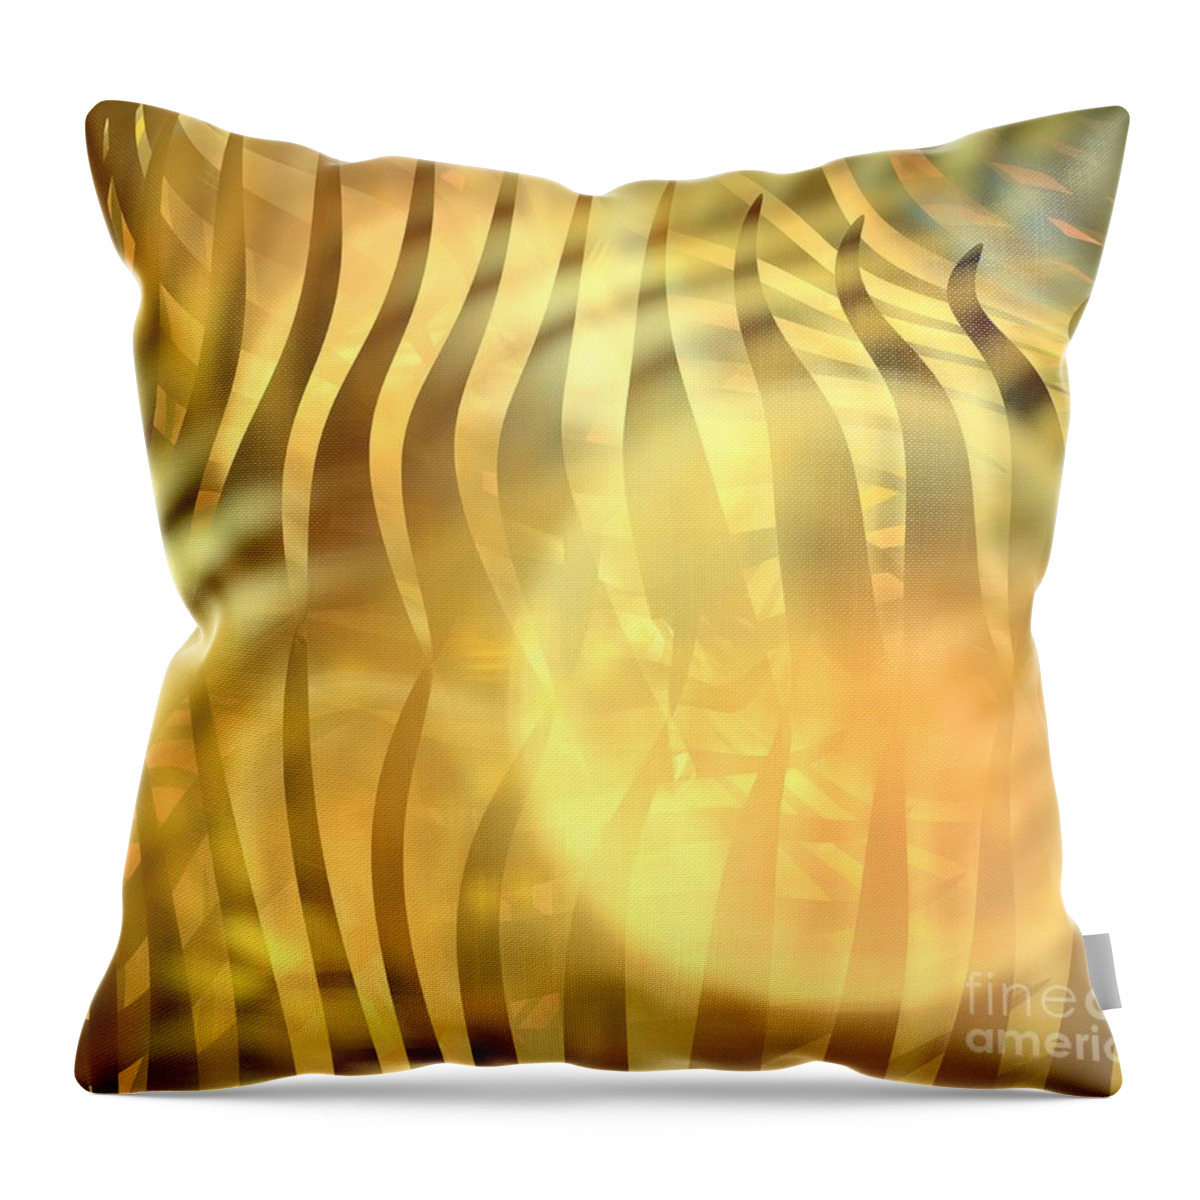 Apophysis Throw Pillow featuring the digital art Sun Reeds by Kim Sy Ok